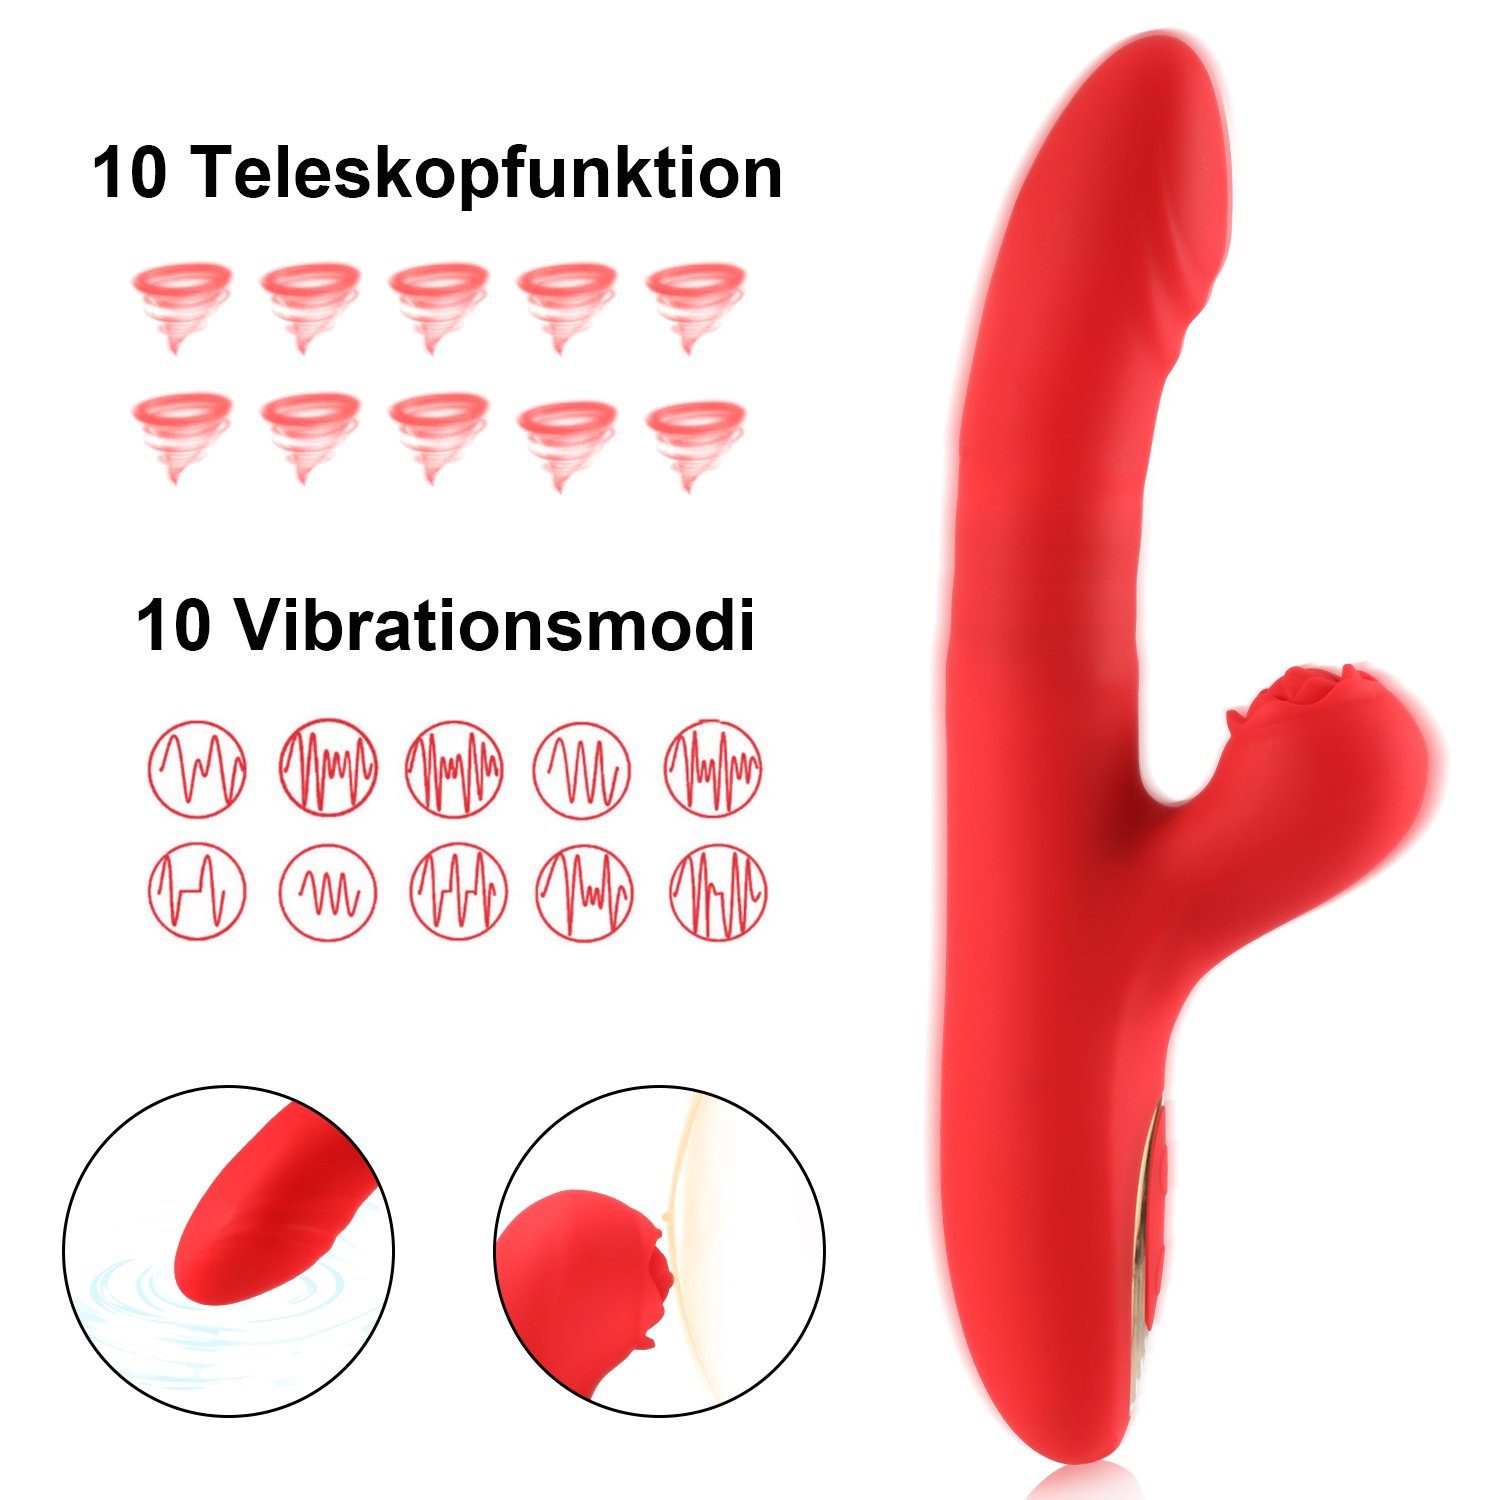 mit Spielzeug + 10 LETGOSPT 10 Analvibratoren G-Punkt-Vibratoren, Frauen die Vibrationsmodi für Sex Vibrator Teleskopmodi,